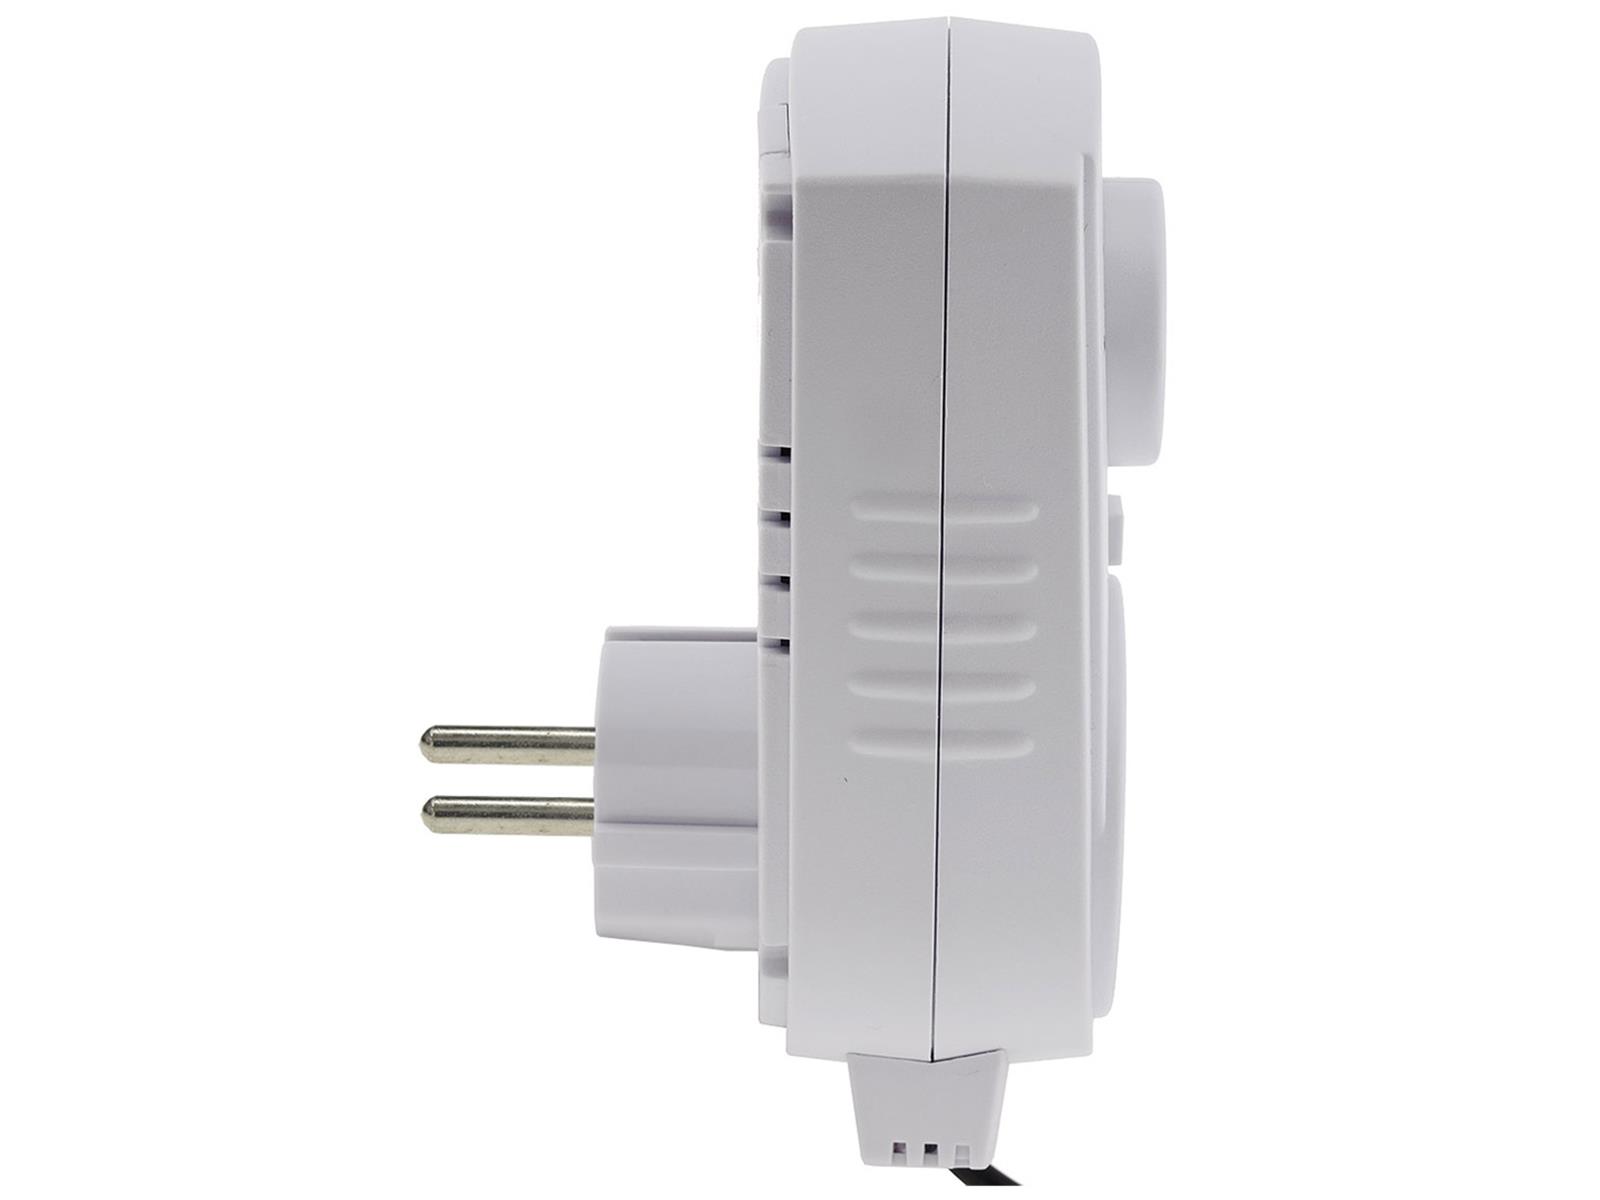 Steckdosen-Thermostat "ST-50" ana EXT5-30°C, 230V, 2m Kabel + Außenfühler